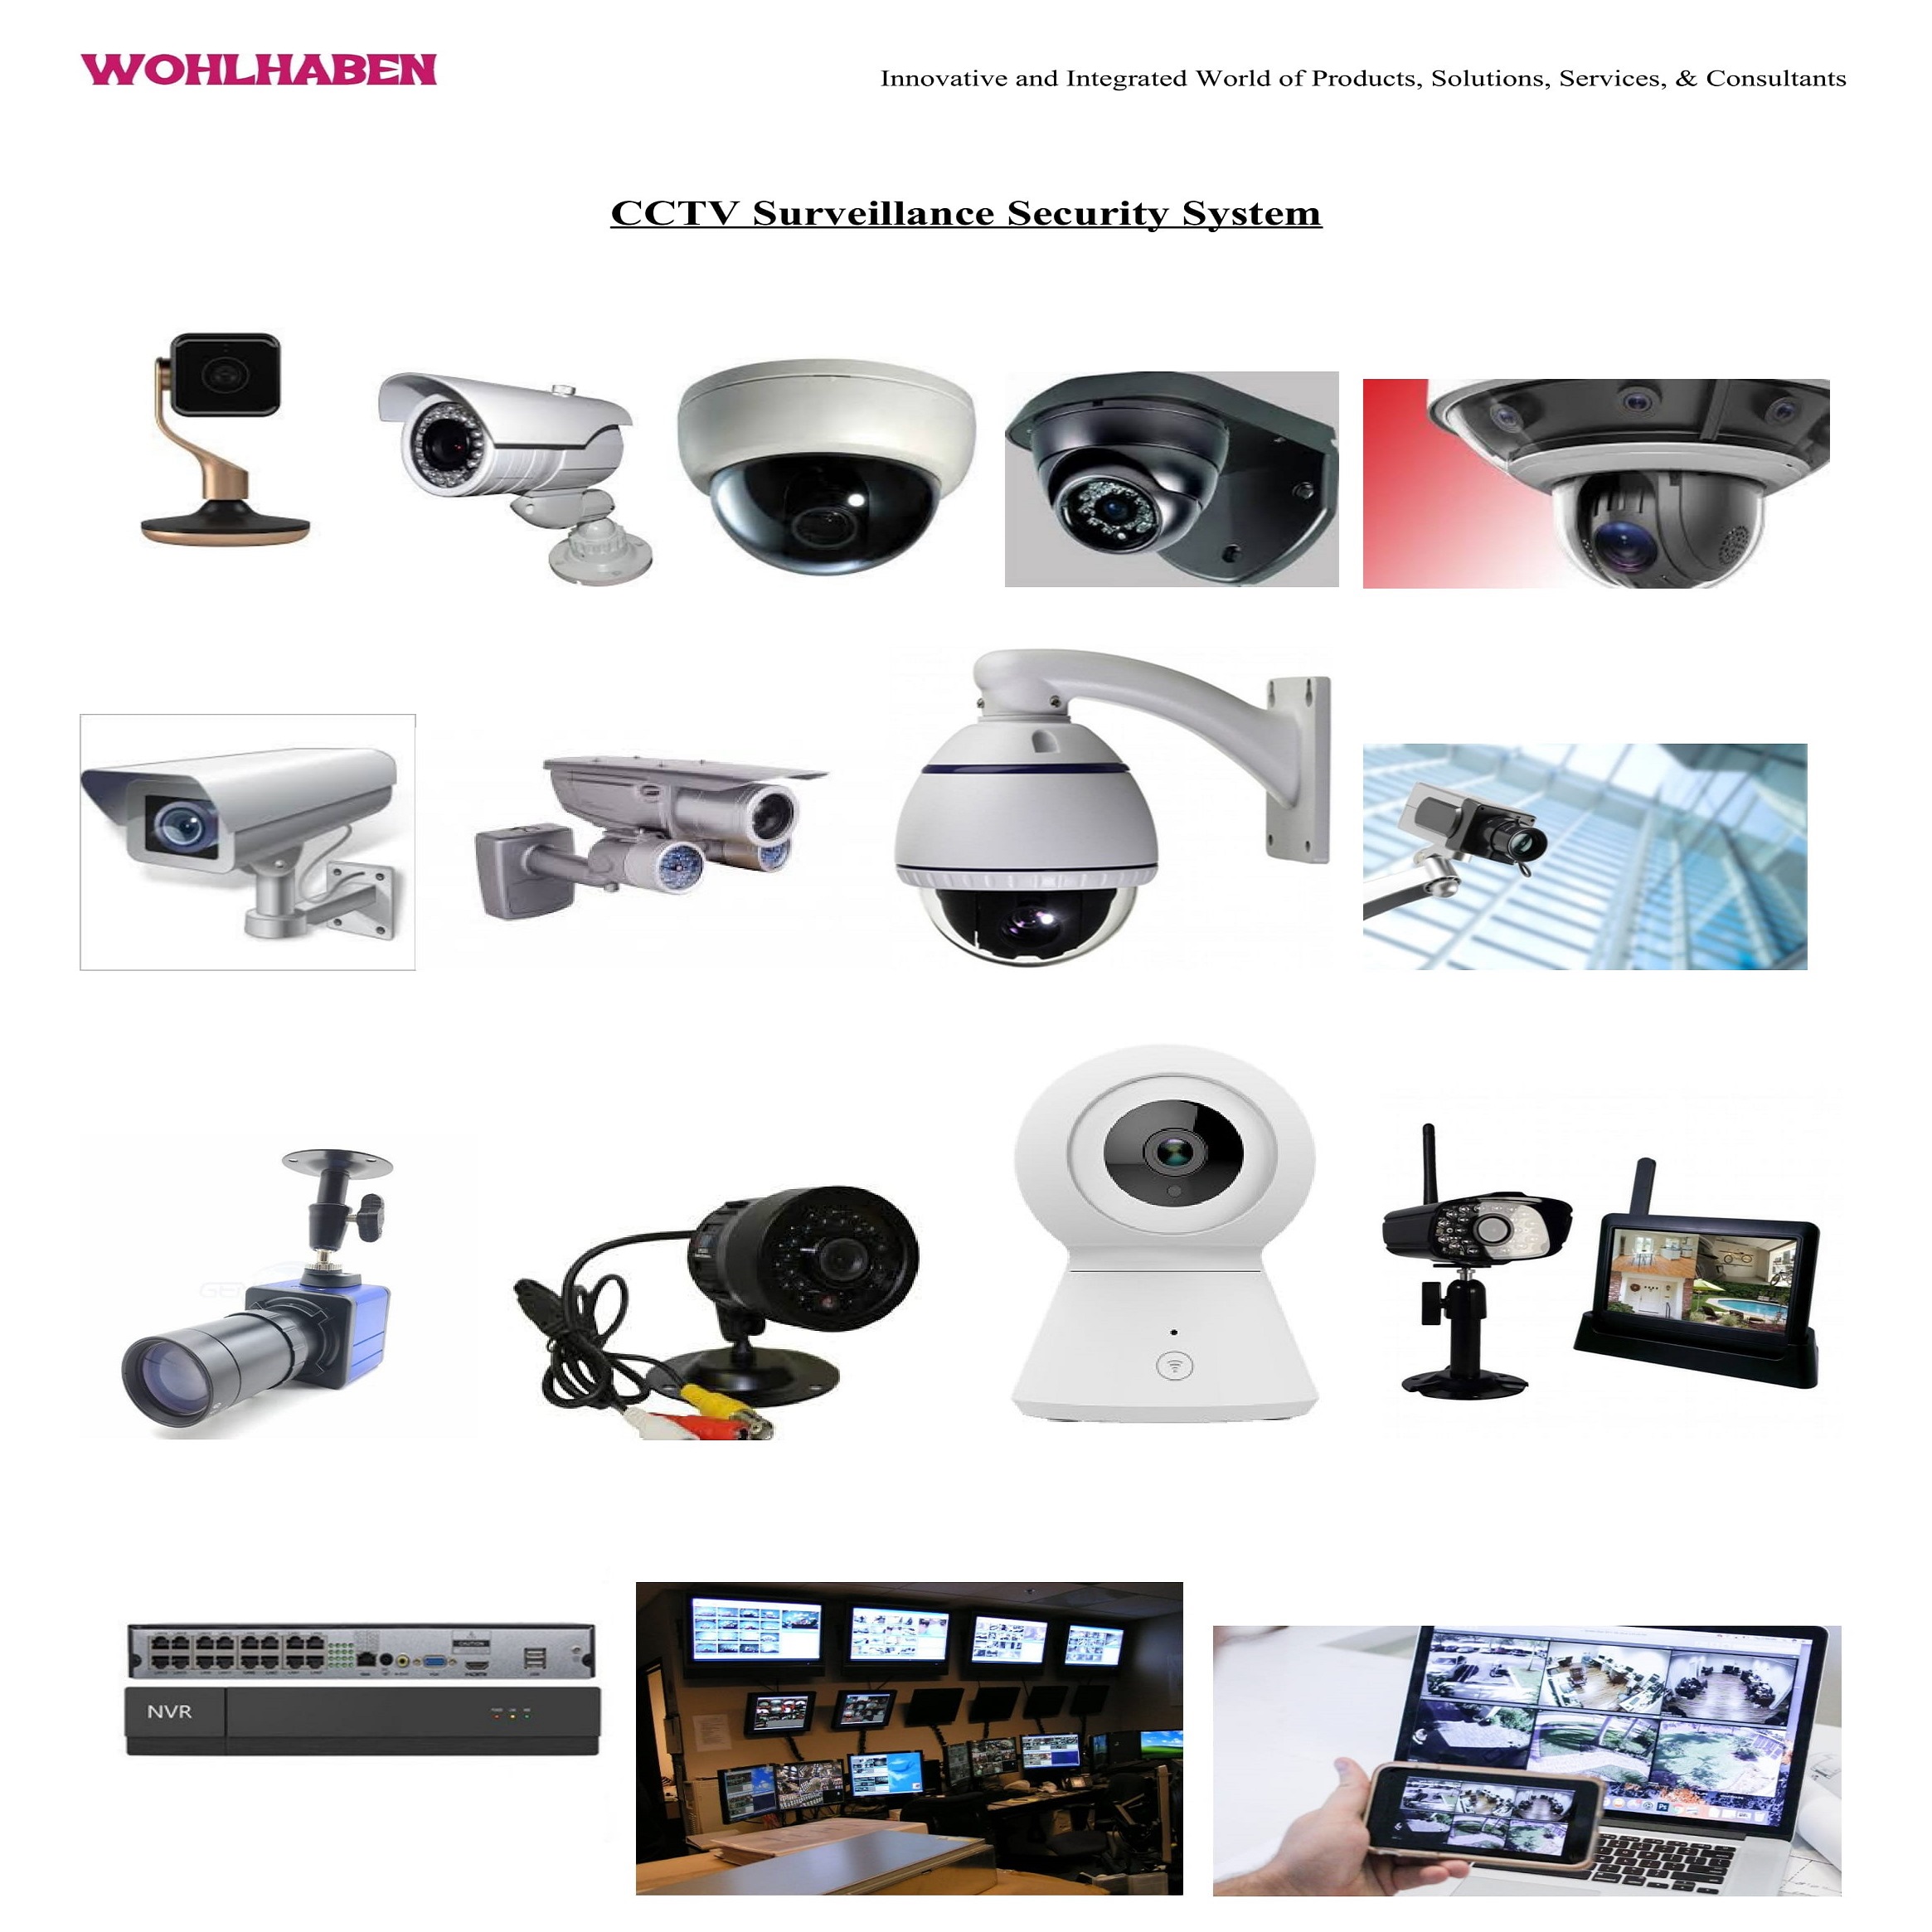 CCTV Surveillance Security System